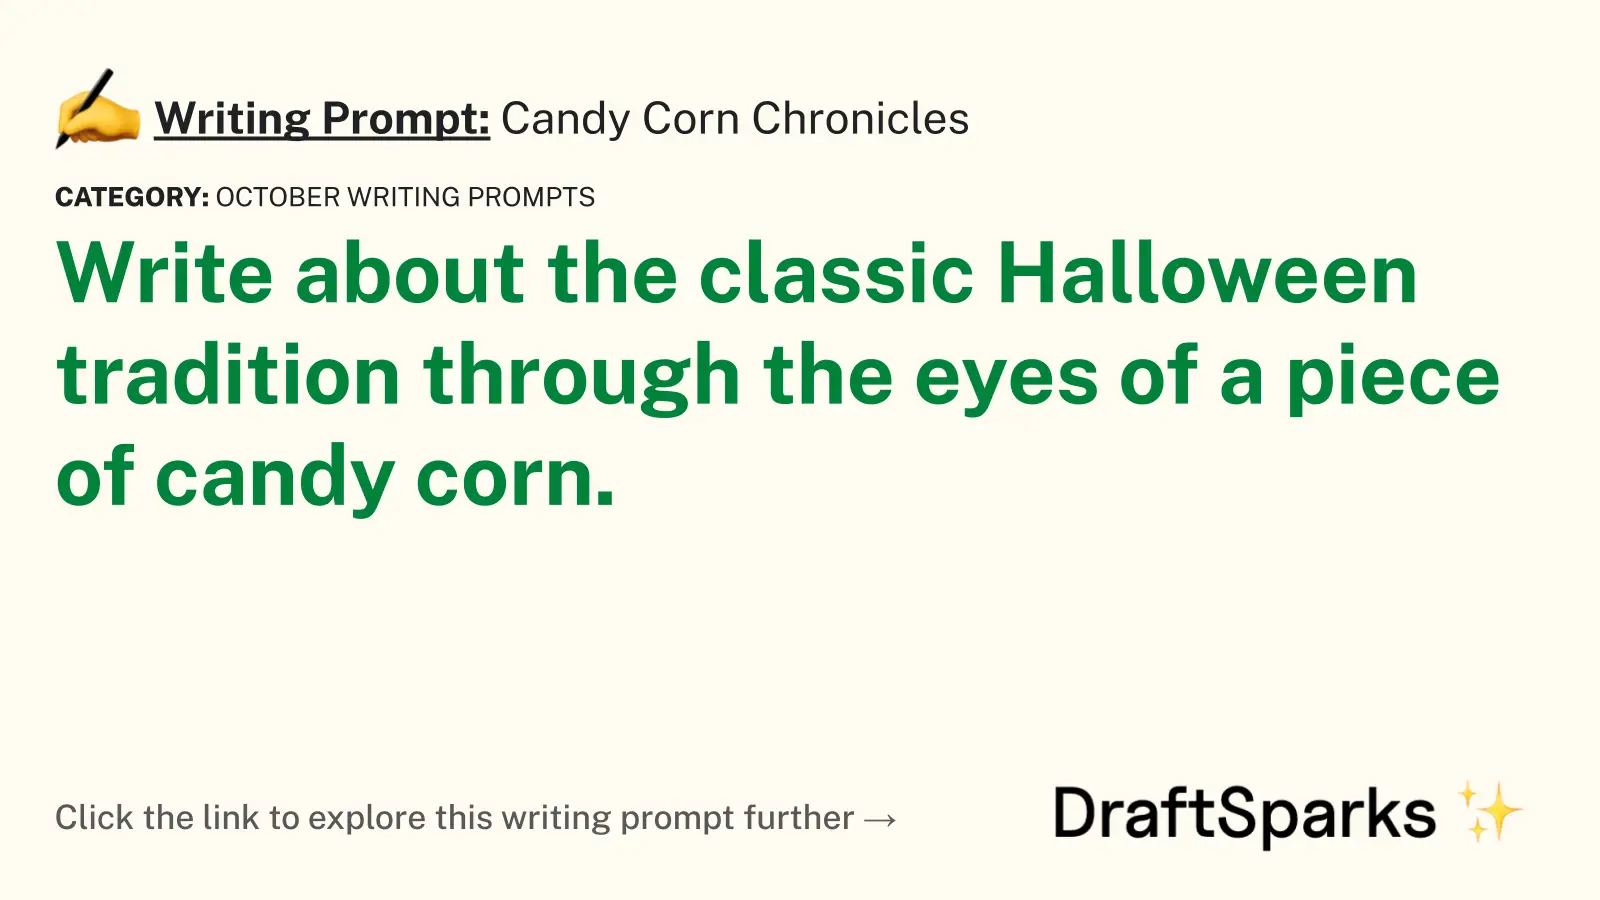 Candy Corn Chronicles